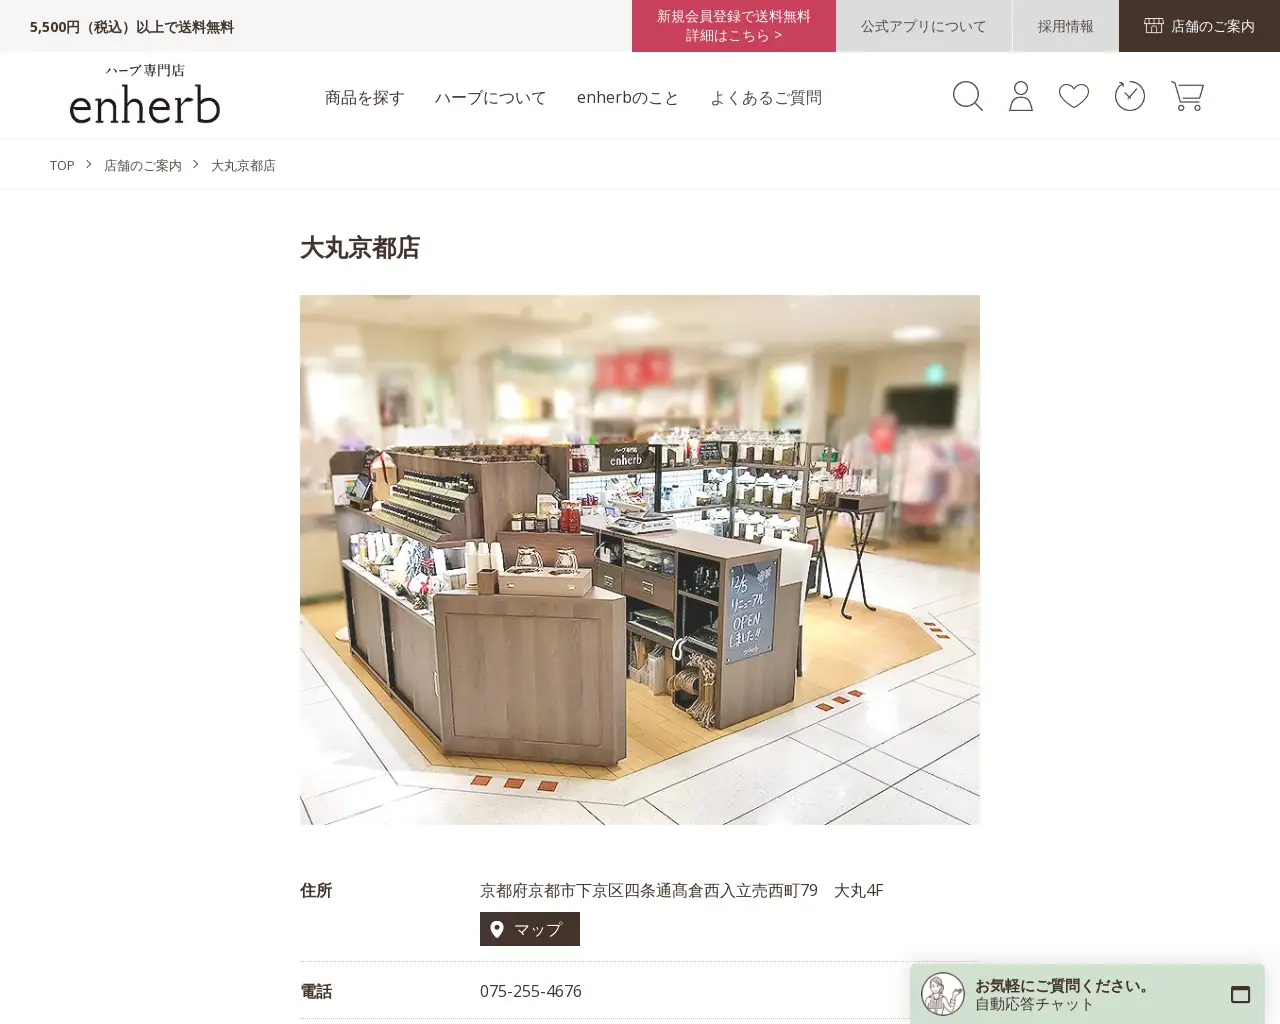 enherb 大丸京都店 site